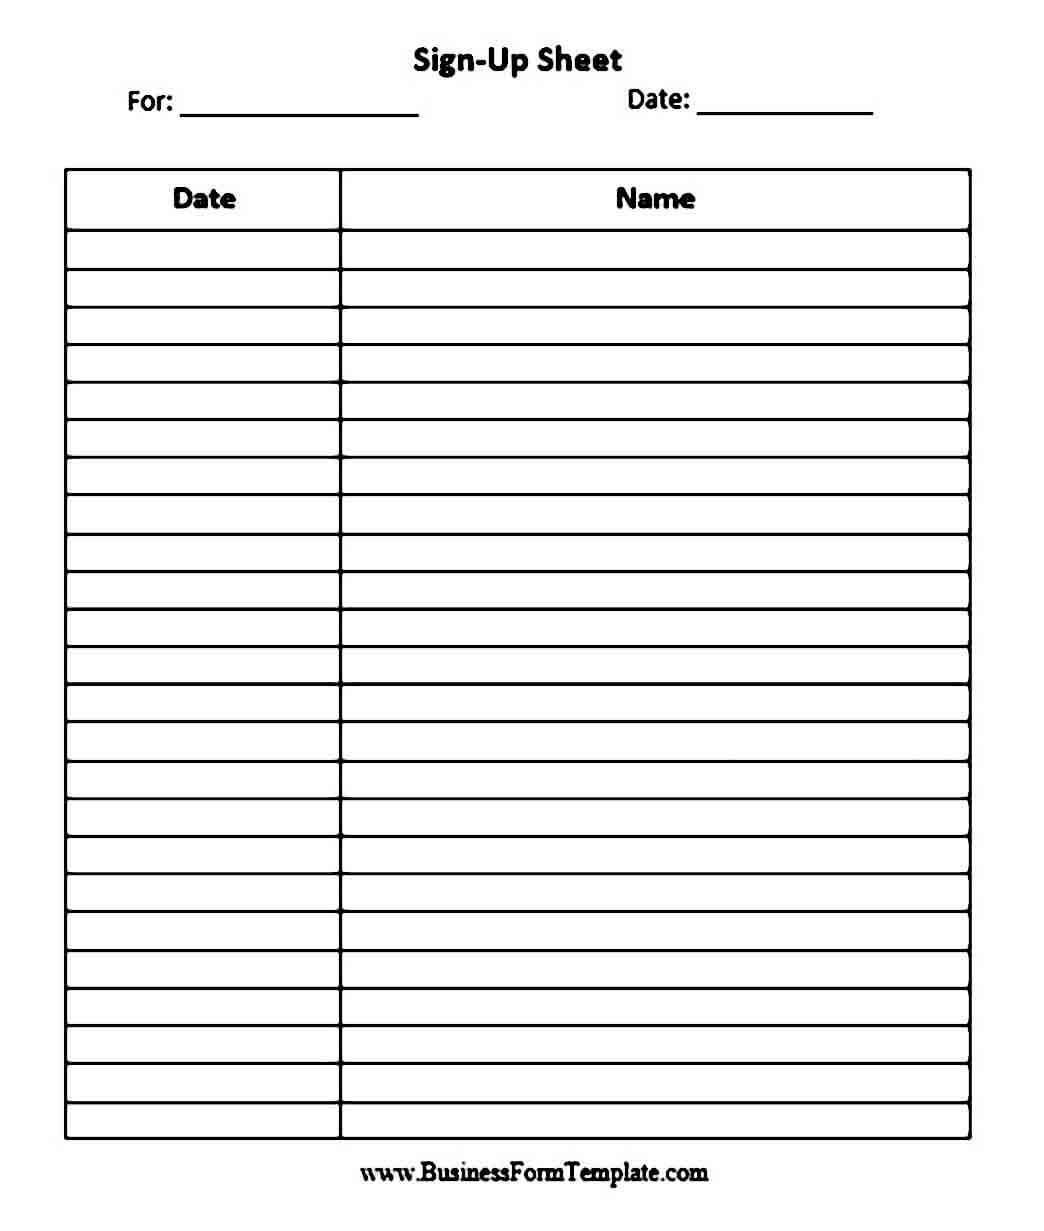 Sign Up Sheet templates Word